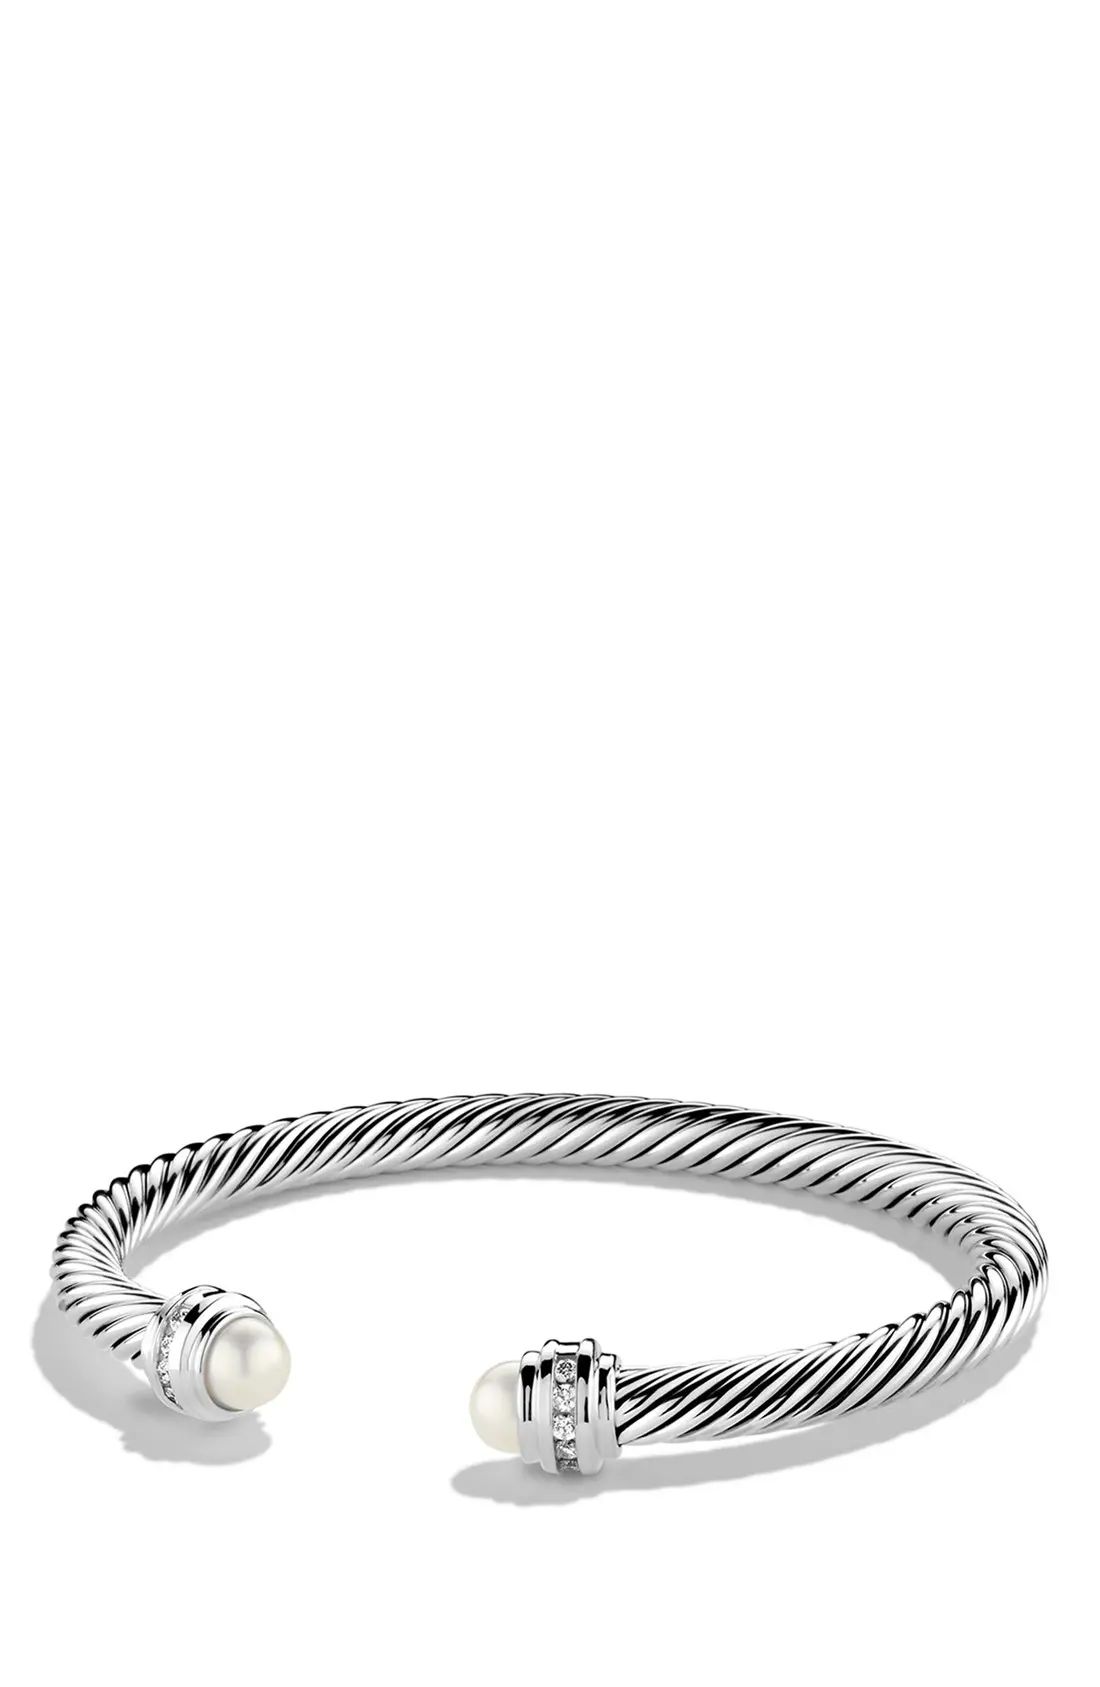 Women's David Yurman Cable Classics Bracelet With Semiprecious Stones & Diamonds | Nordstrom